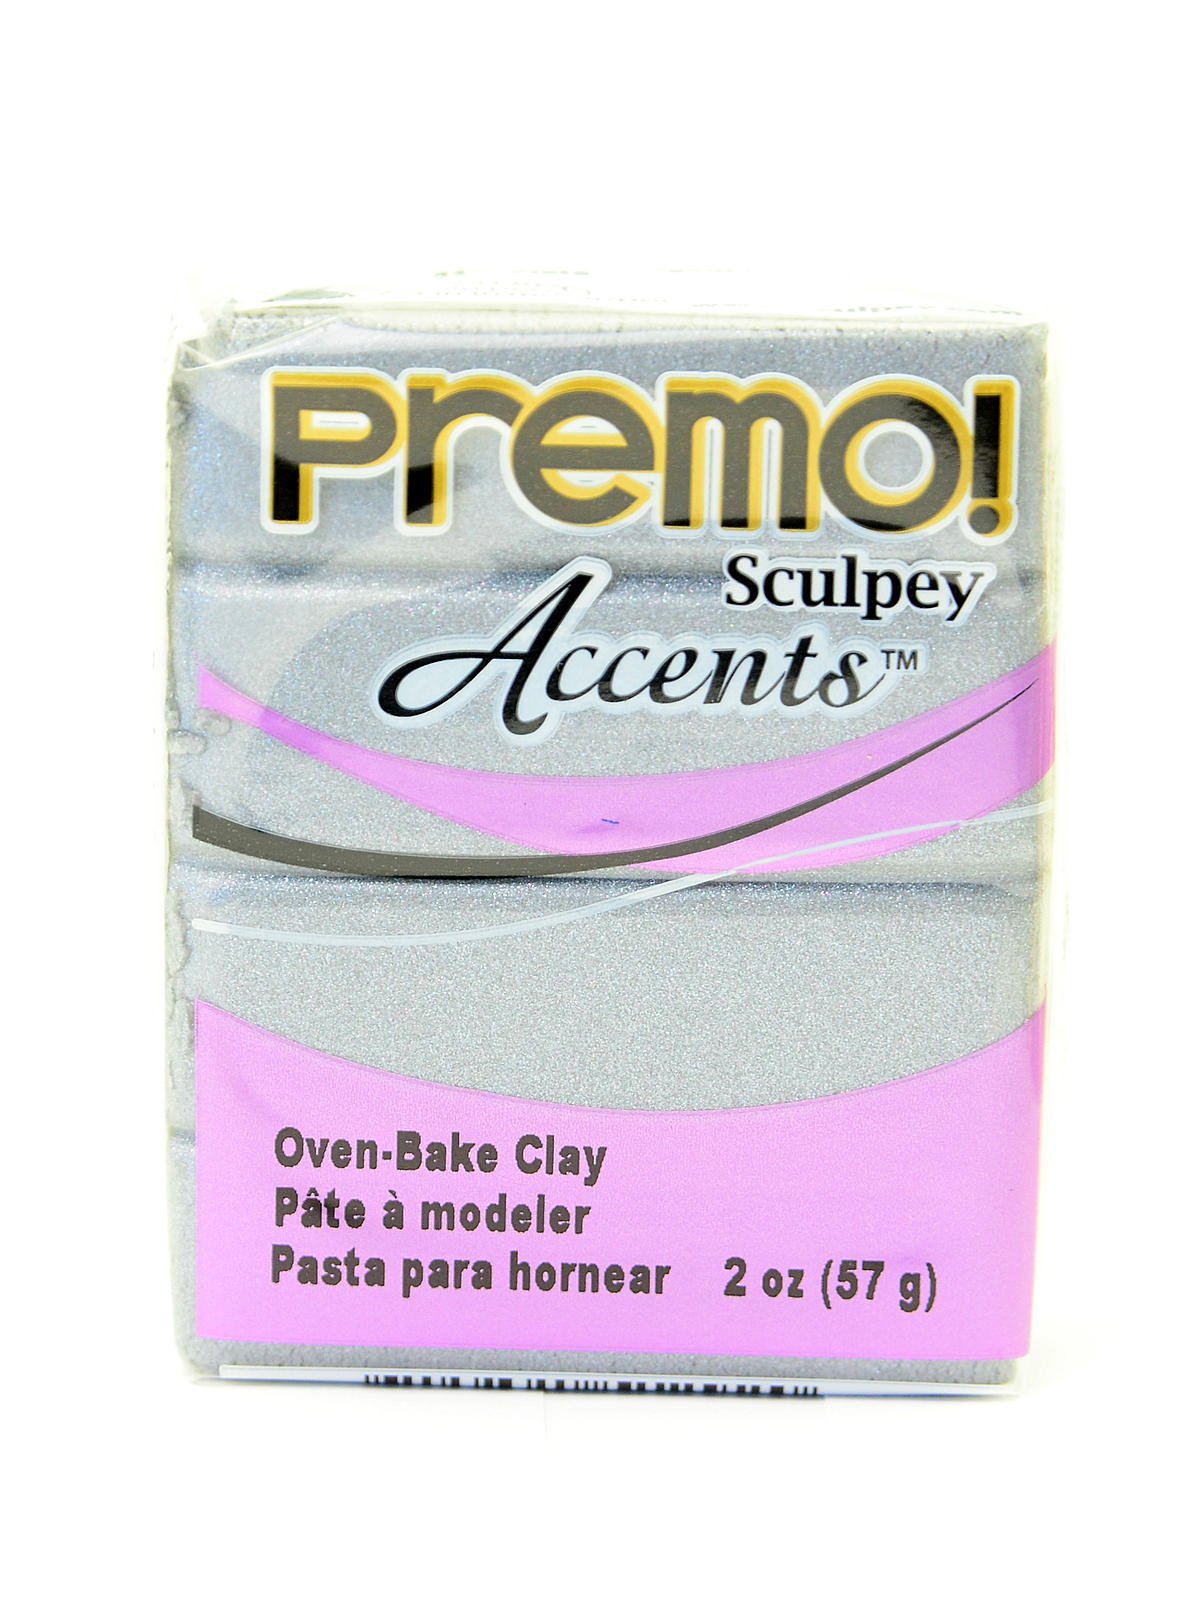 Sculpey Premo Polymer Clay - Black 2 oz.